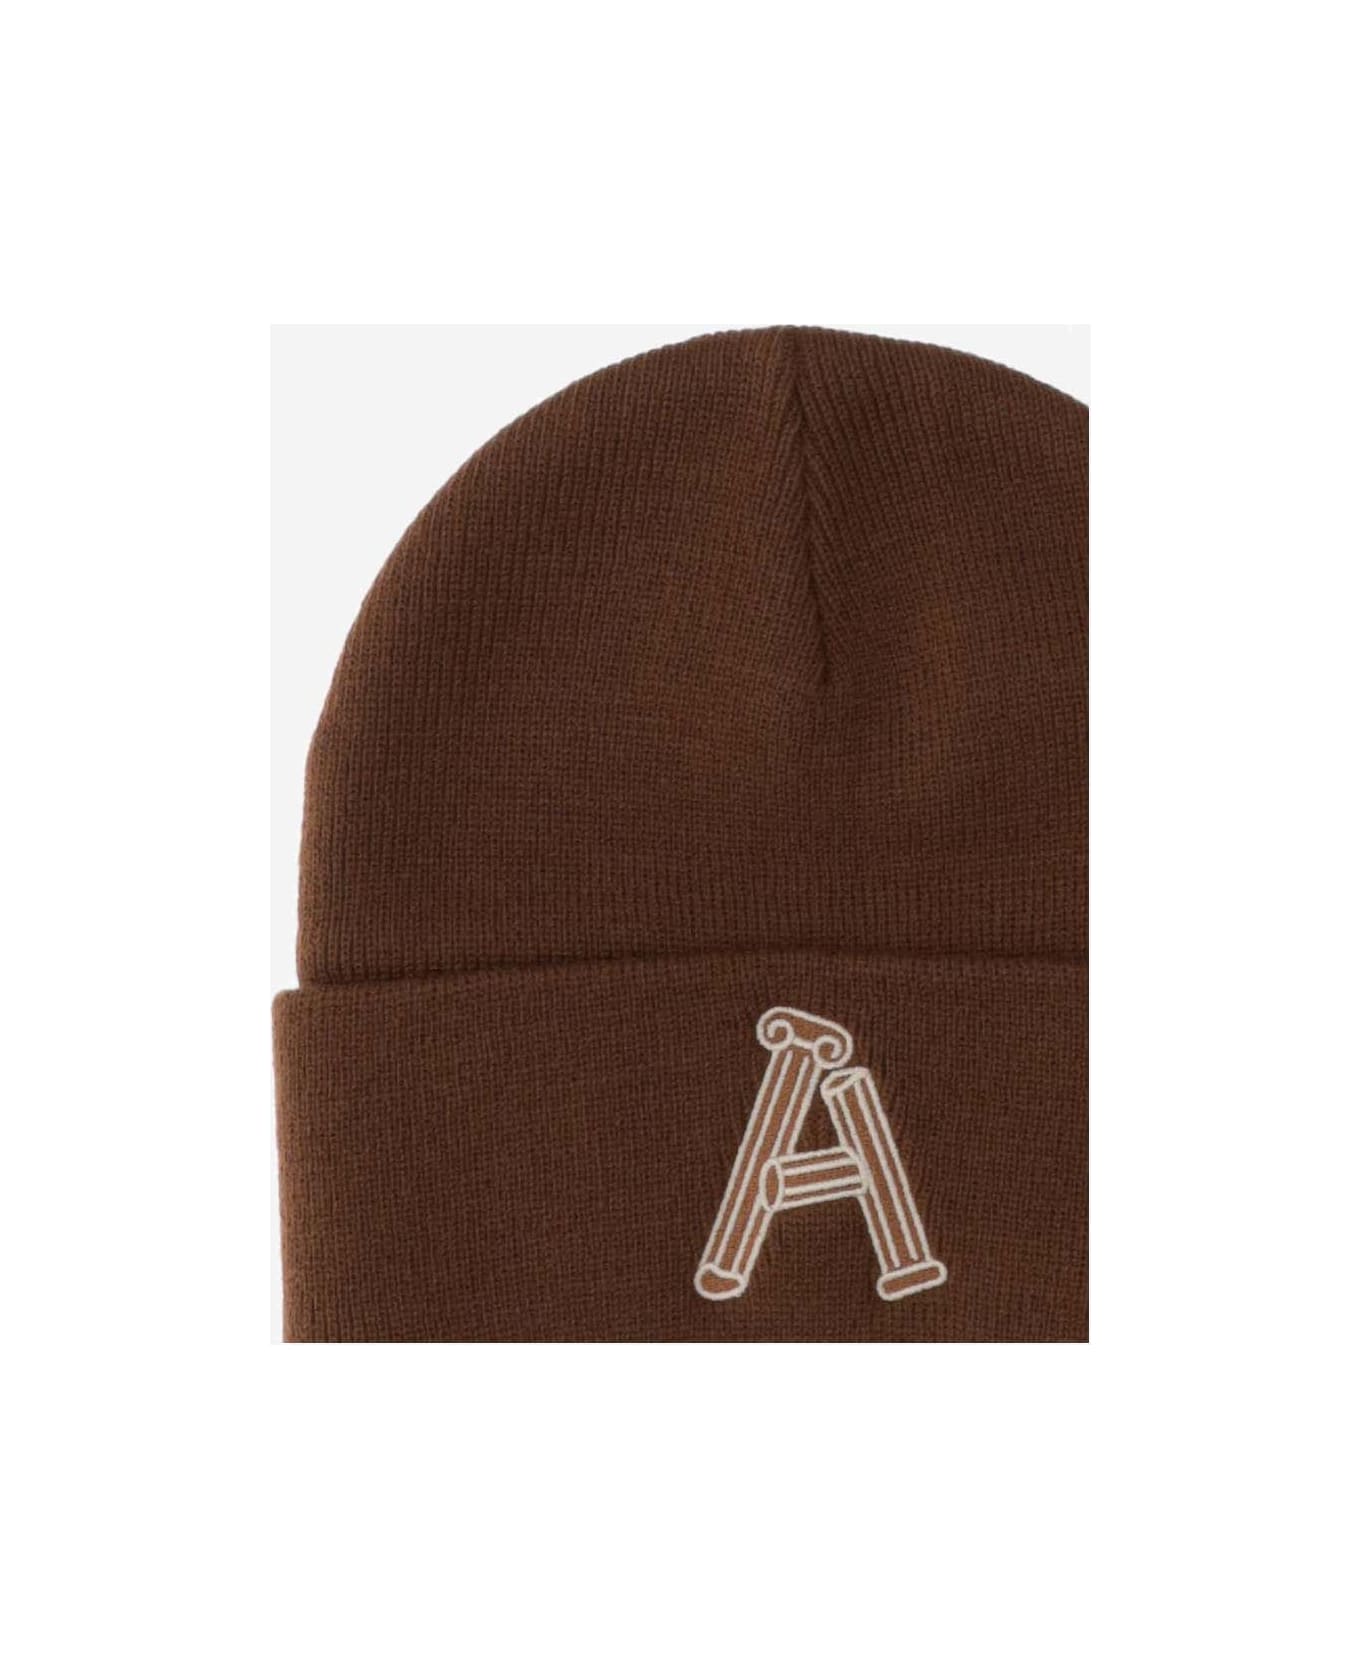 Aries Embroidered Beanie - Brown 帽子